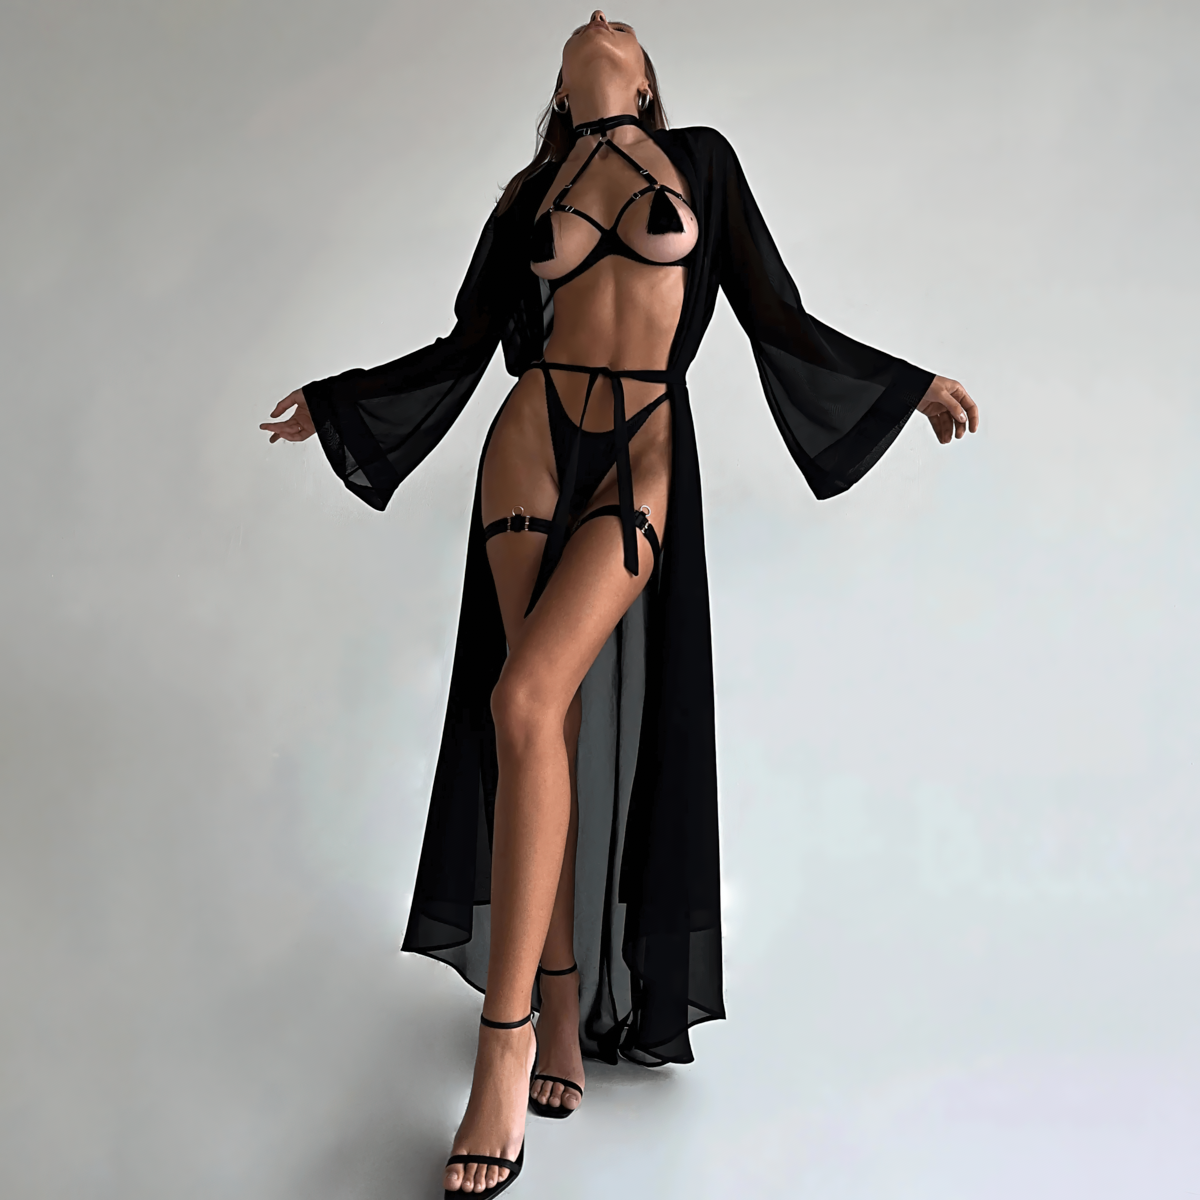 Women's Lingerie Sets / Sexy Female O-Neck Collar Open Chest Bras / Erotic High Waist Panties - EVE's SECRETS